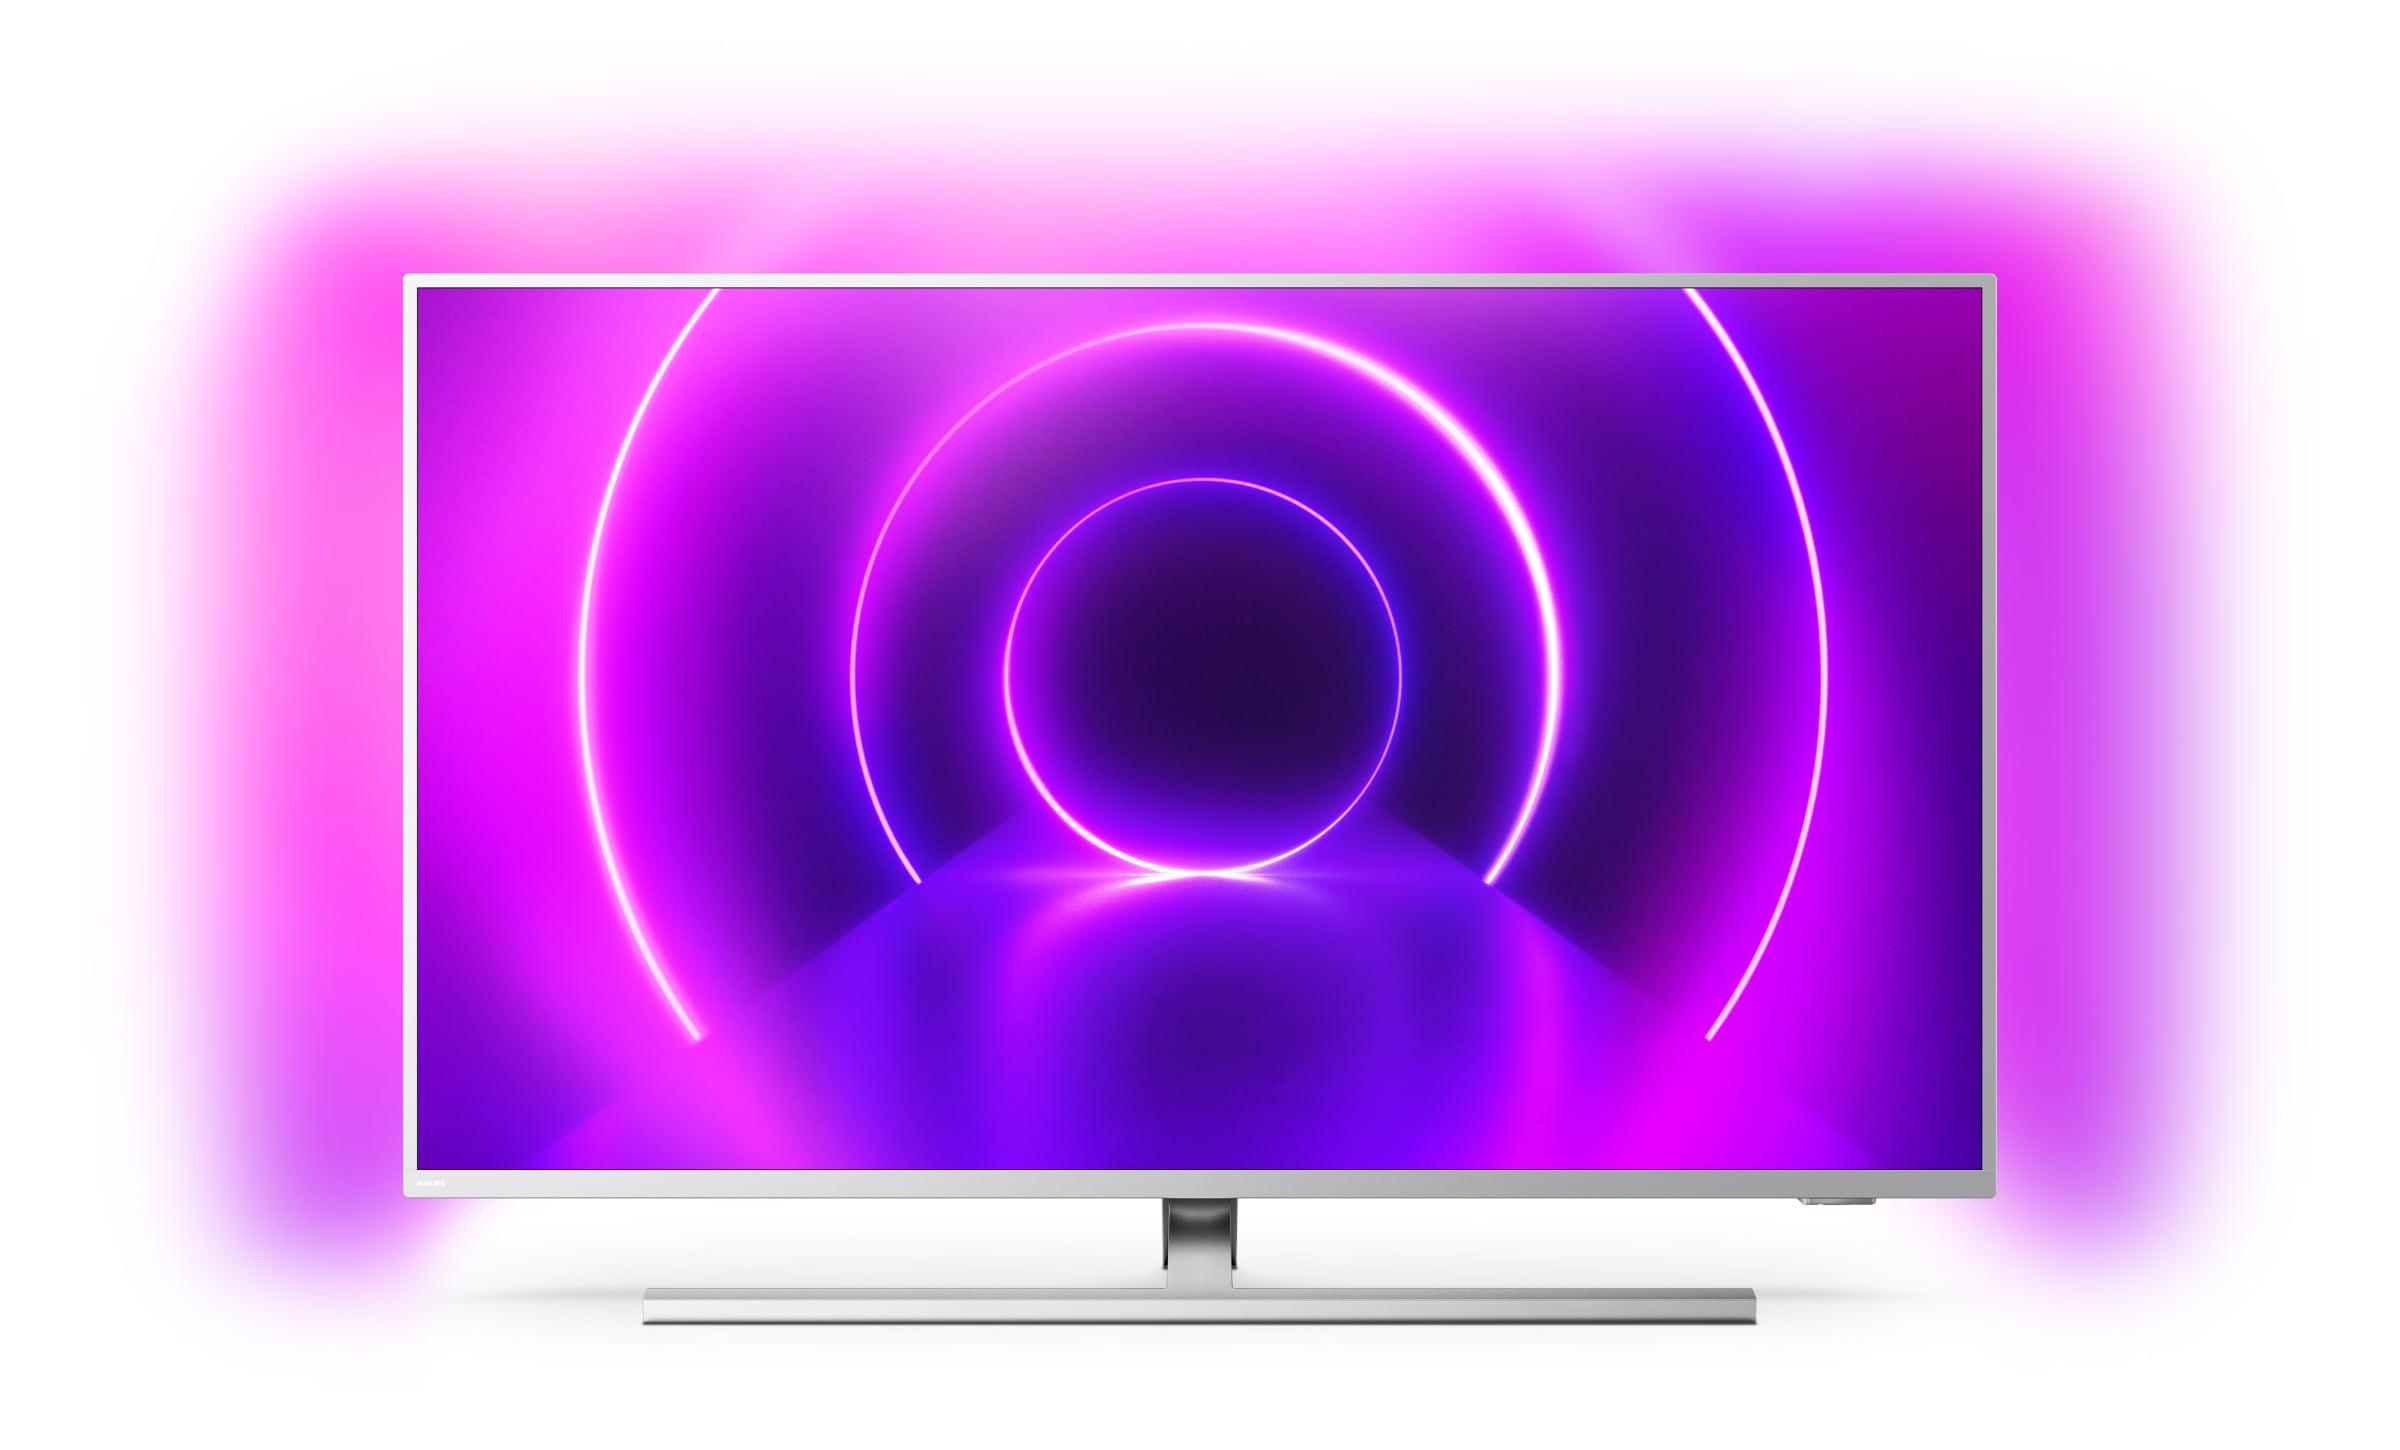 Philips launches its 2019/2020 Ambilight OLED TV range